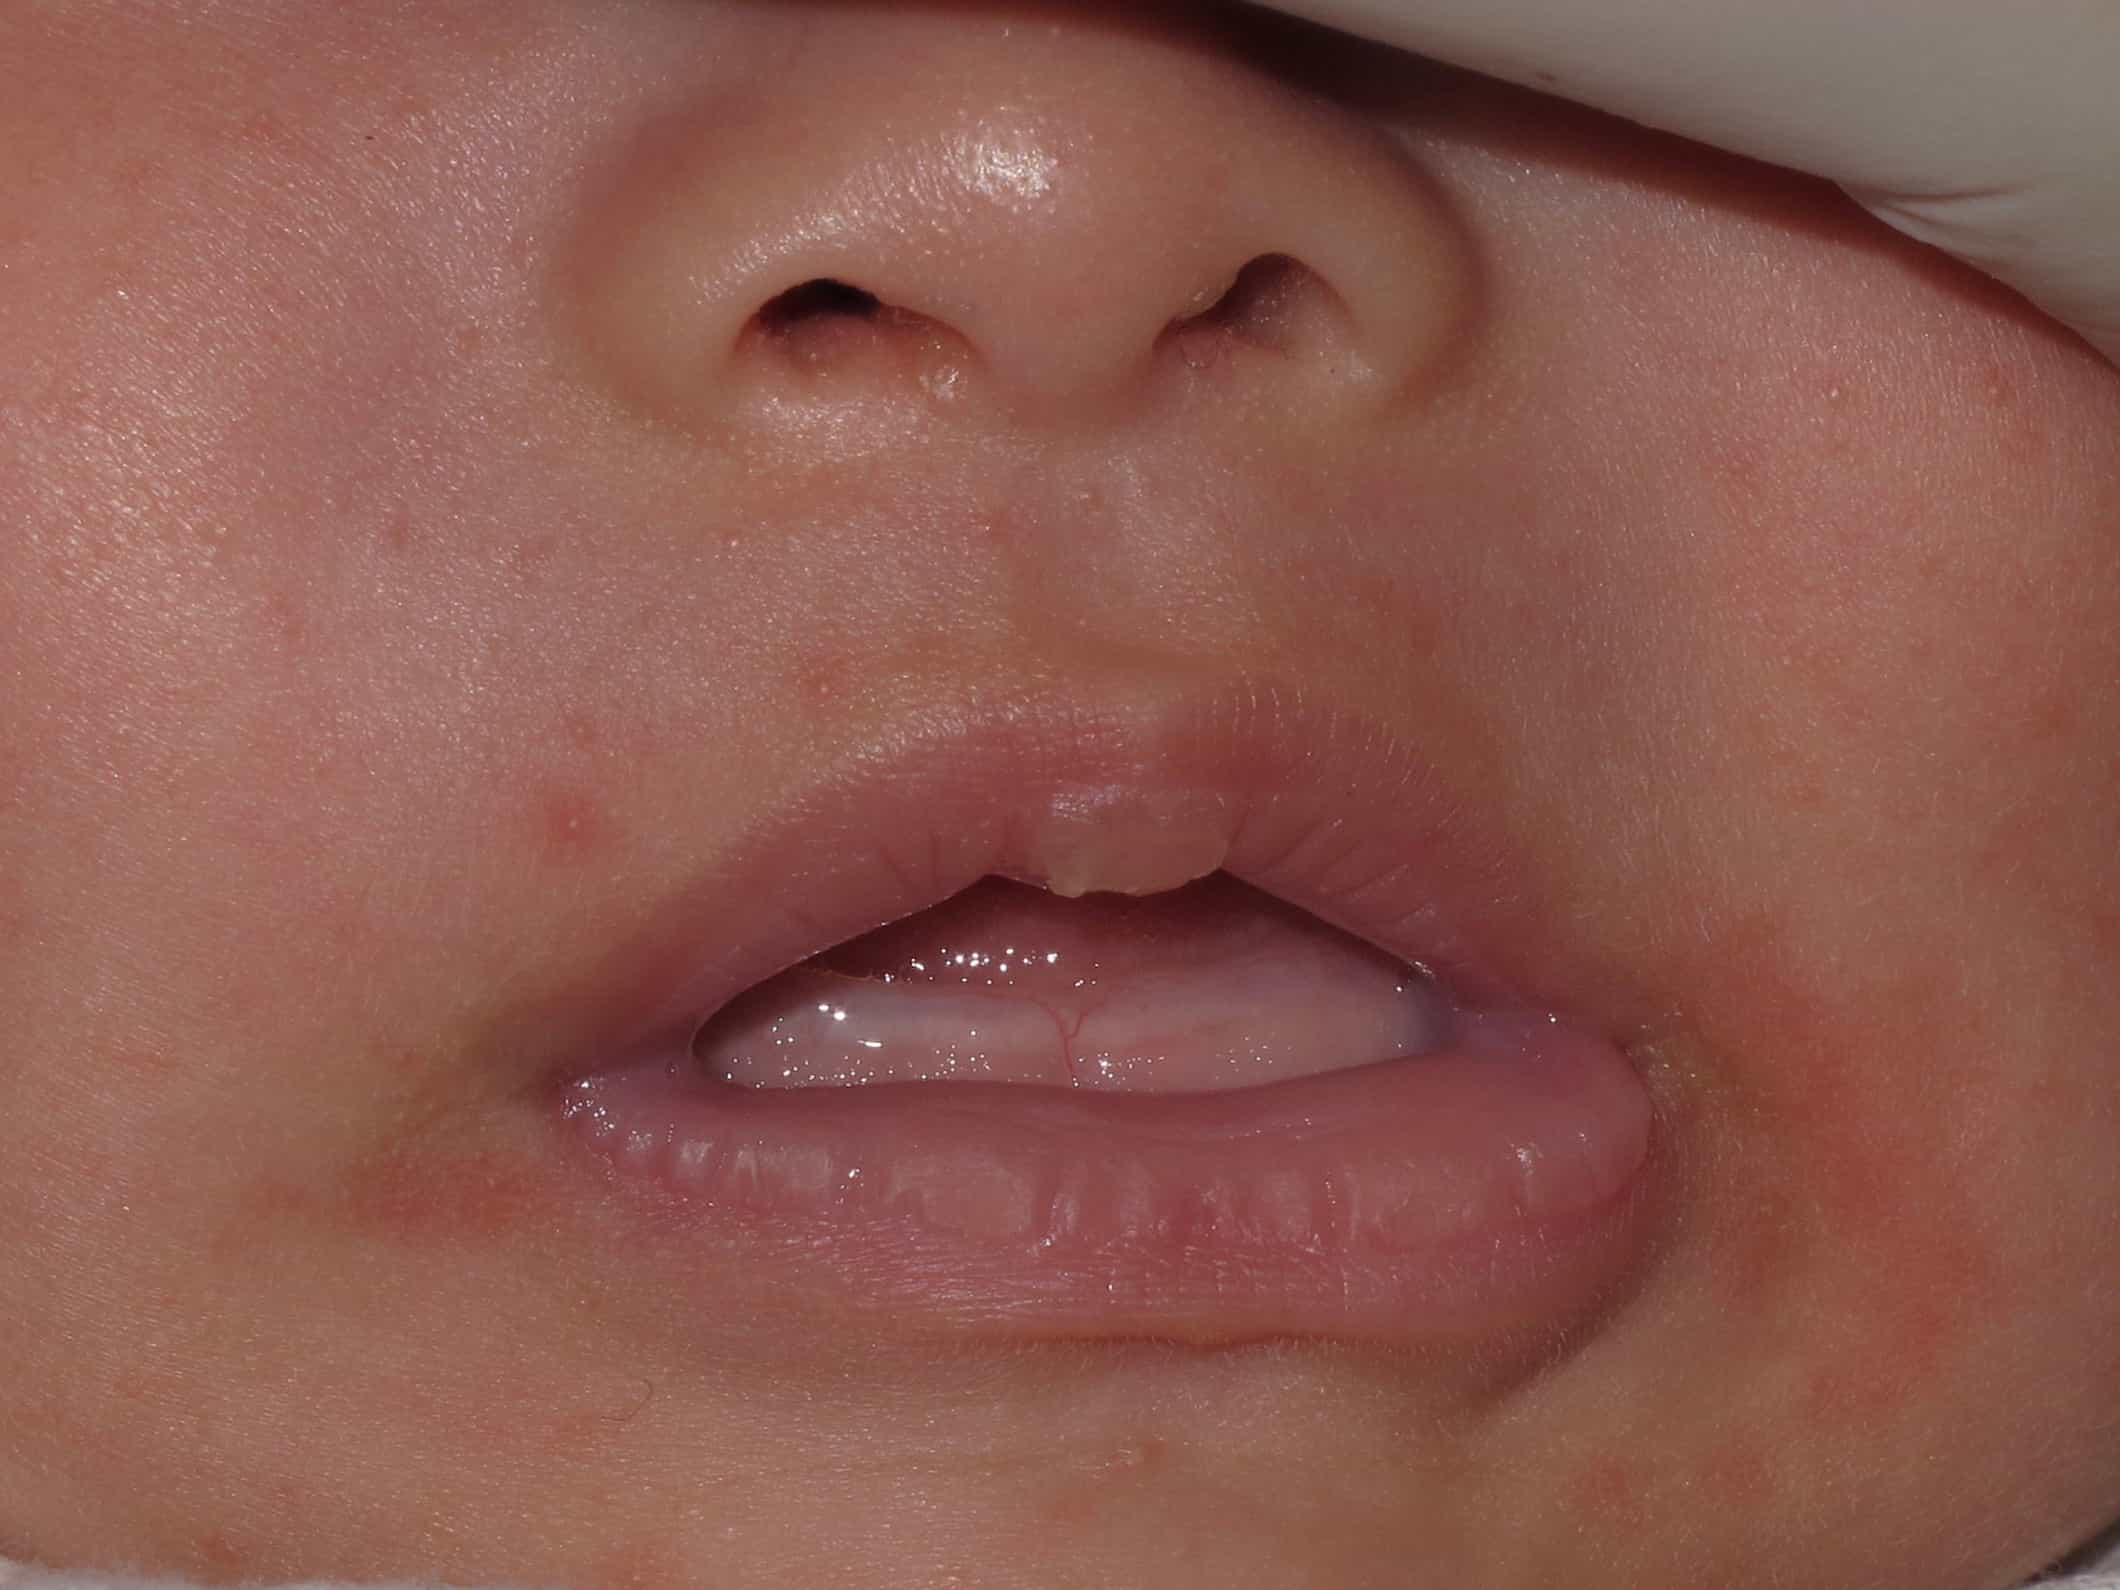 Upper Lip Blister in Baby Due to Upper Lip Tie